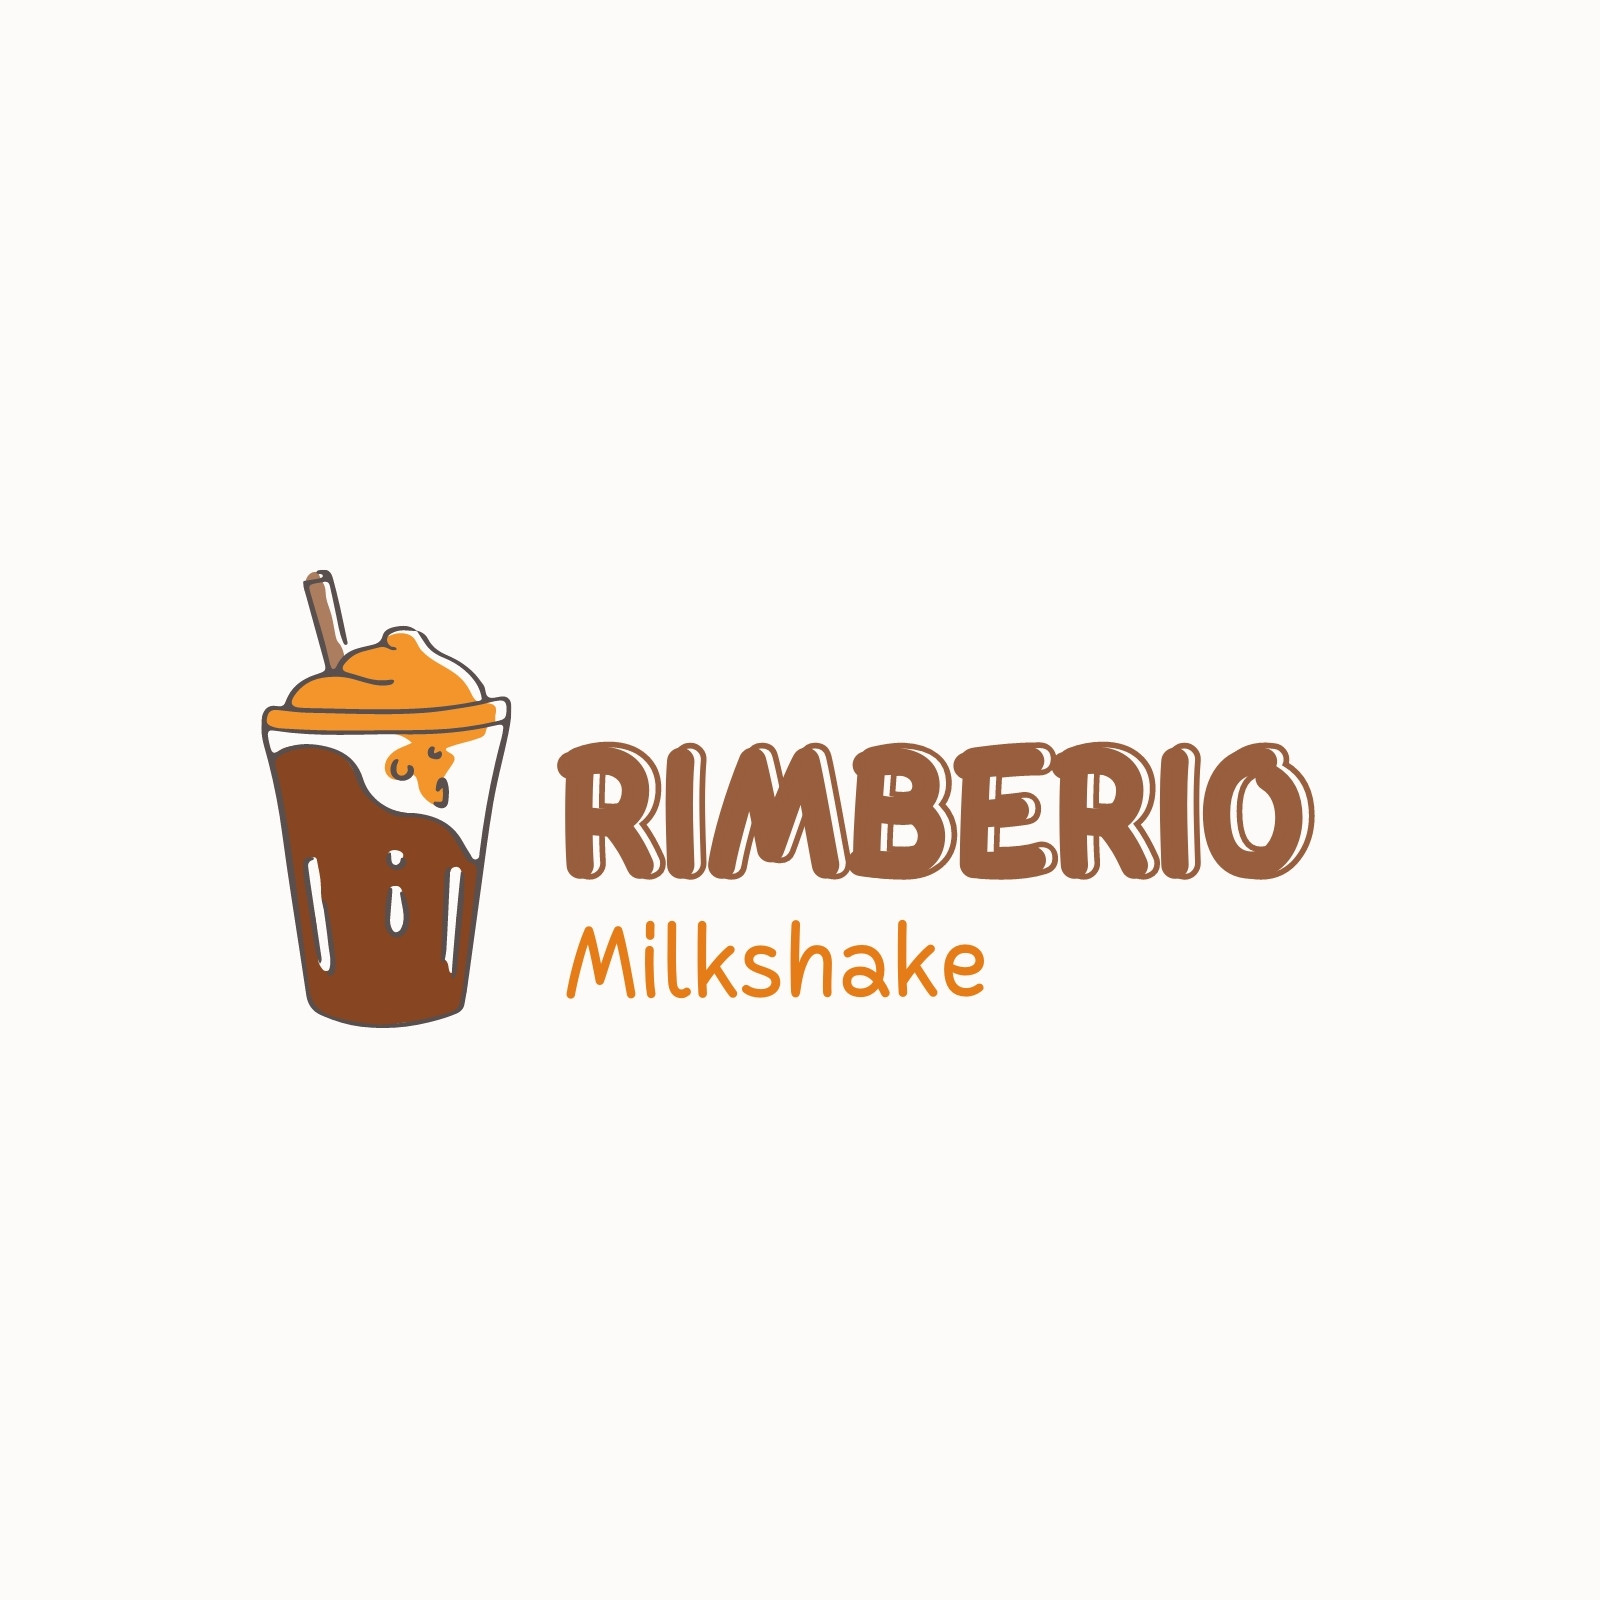 Milkshake Logo by Daniel Pidcock on Dribbble